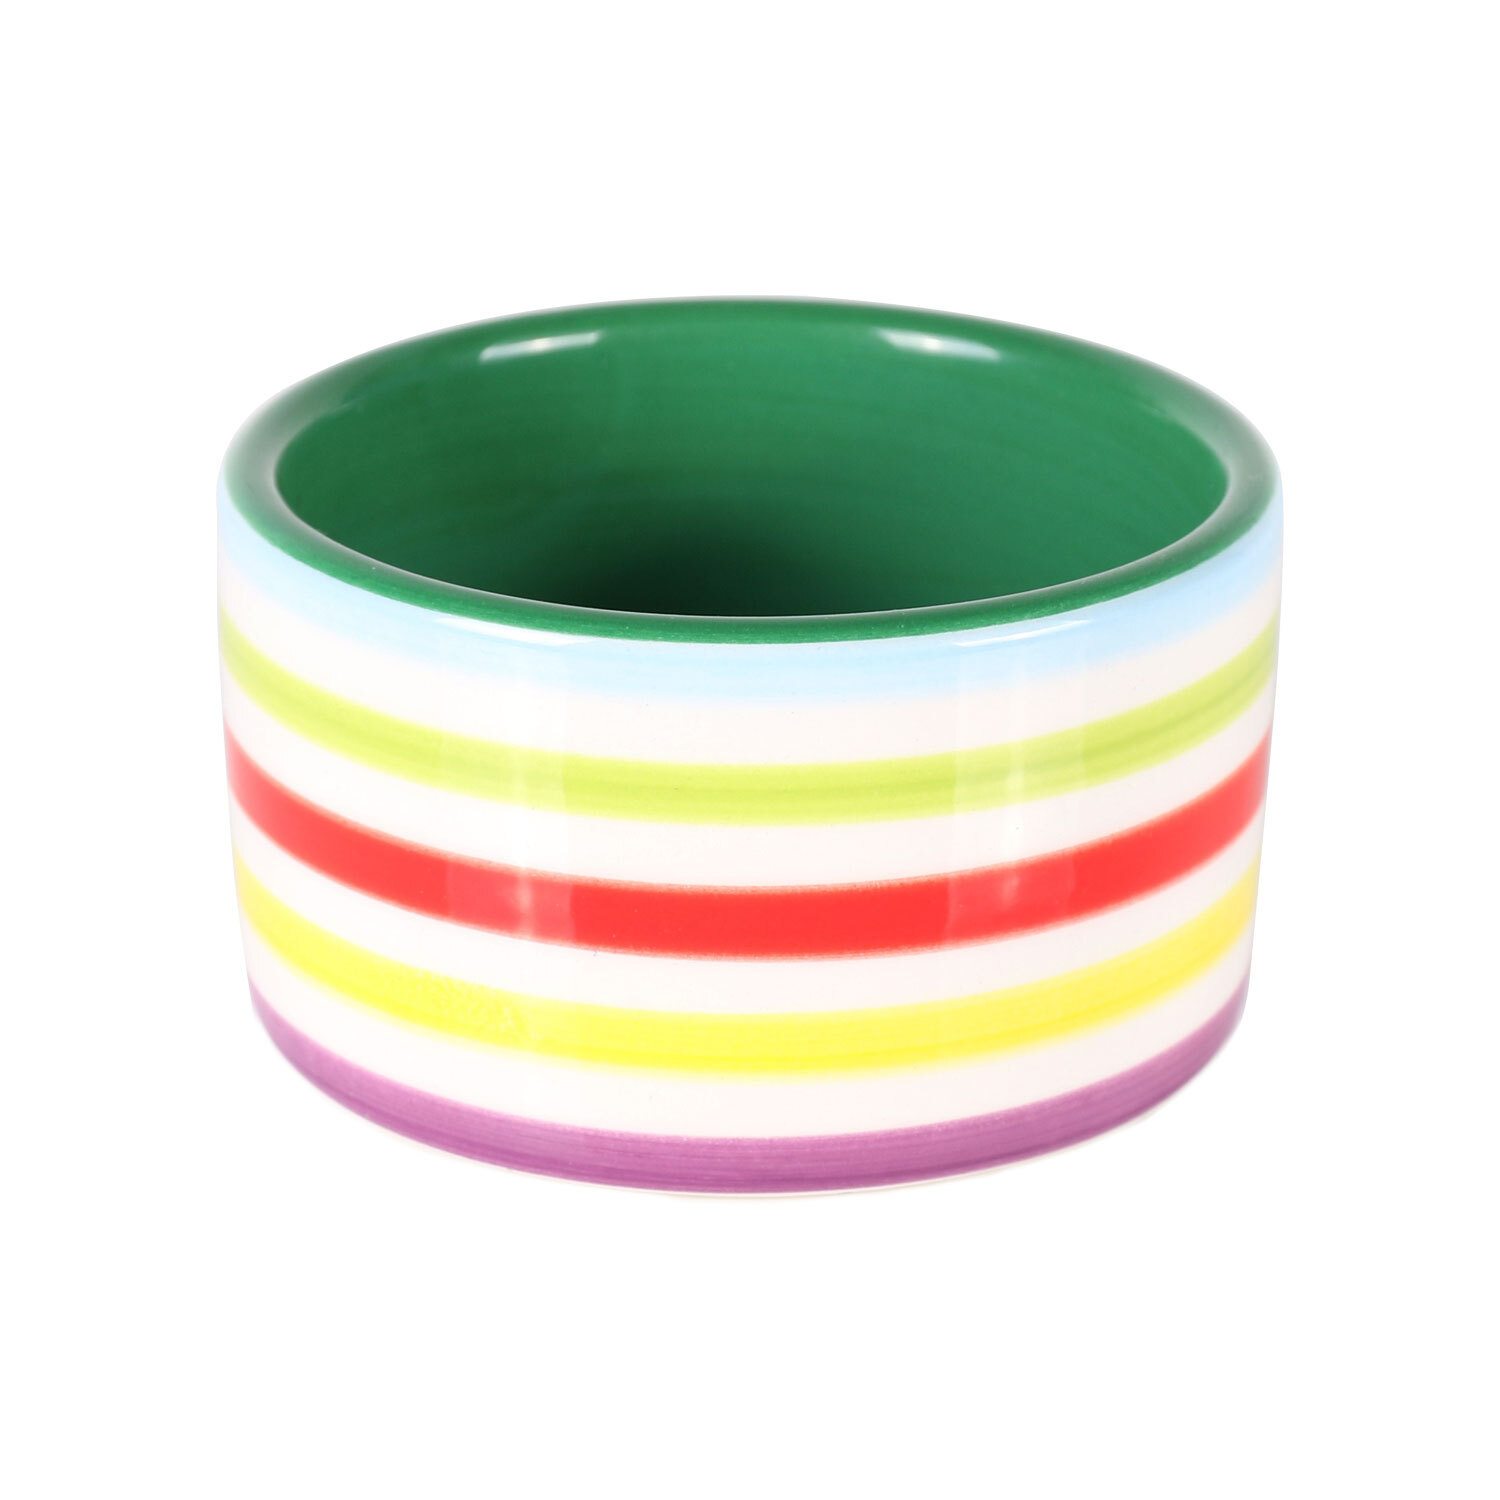 Rainbow Bowl - Medium Image 1